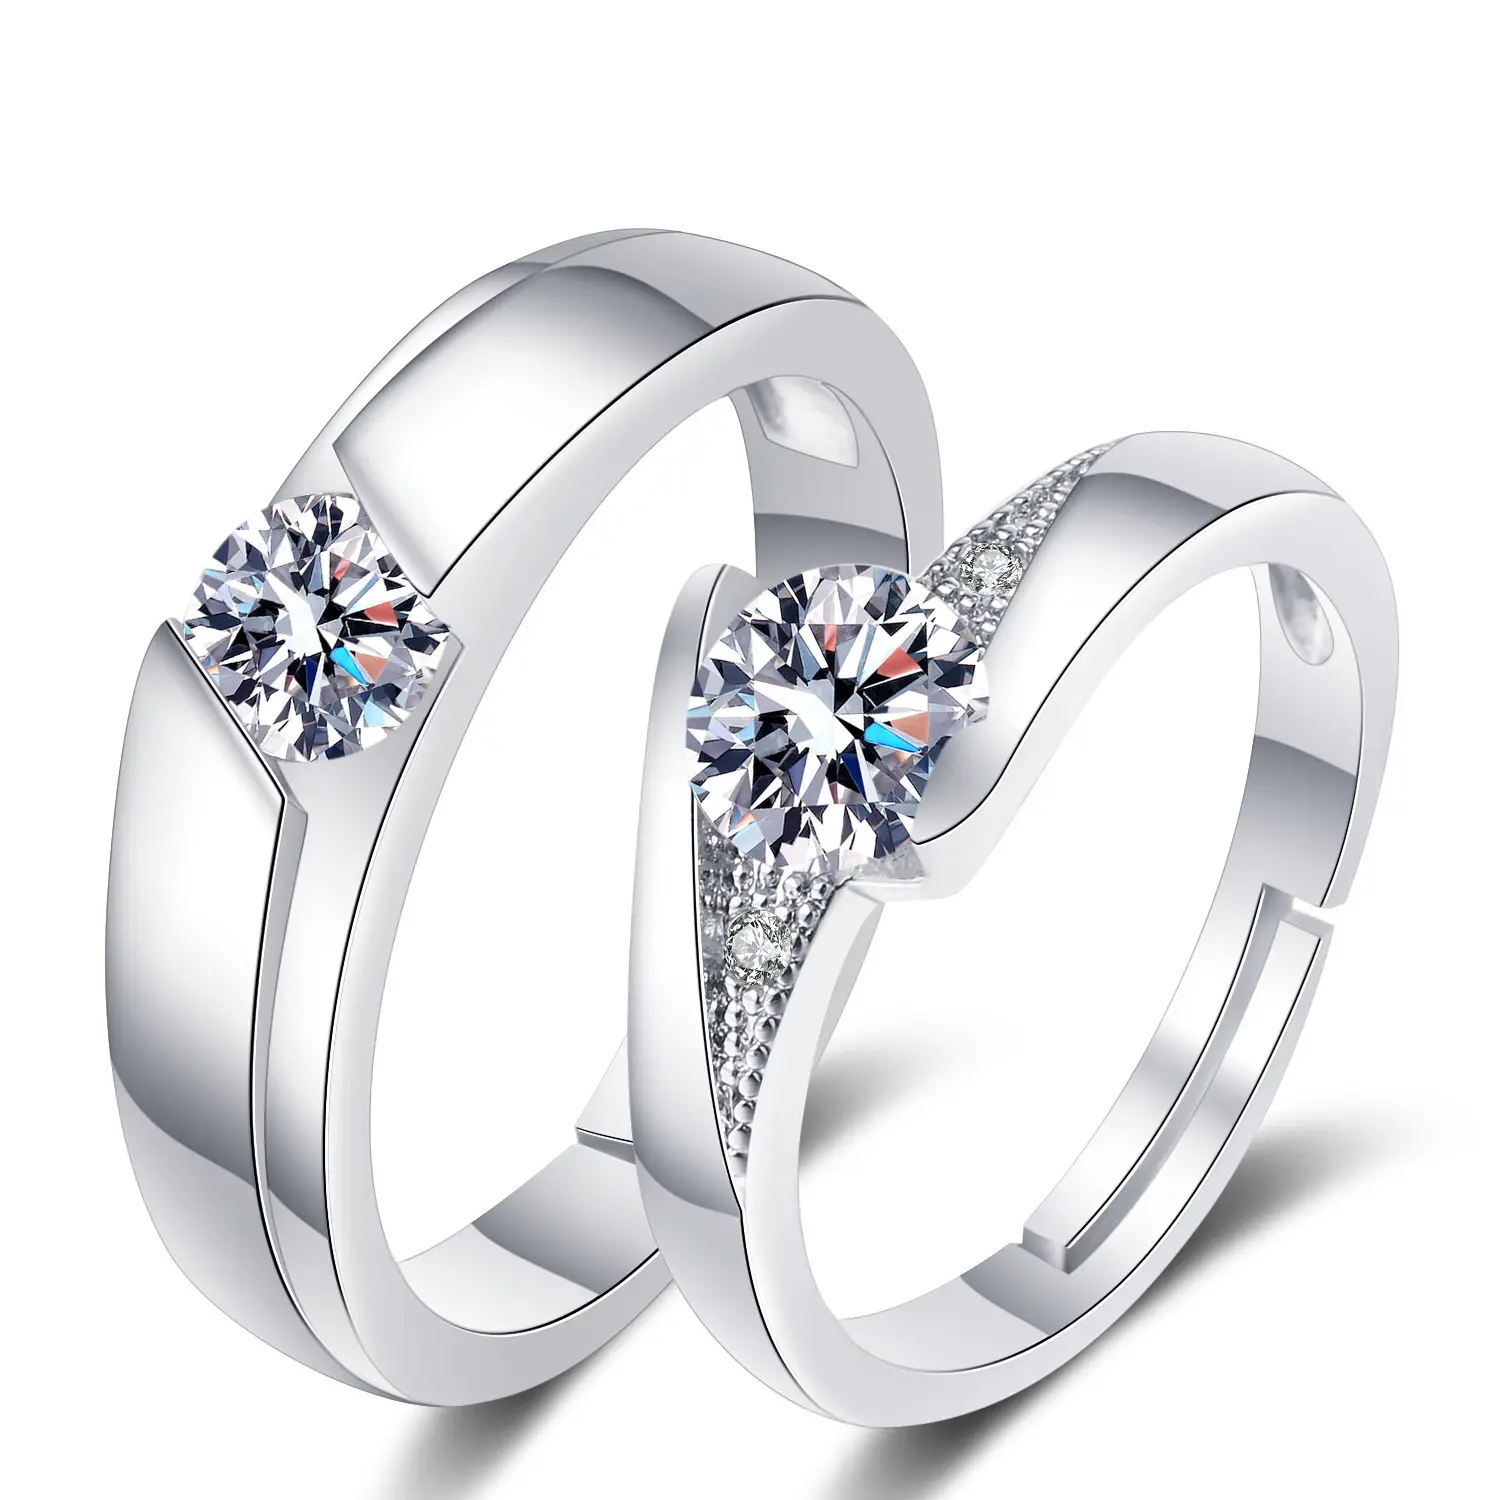 Sederhana atmosfer pria dan wanita pasangan cincin berlapis perak perhiasan cincin terbuka dapat disesuaikan untuk pesta pertunangan pernikahan